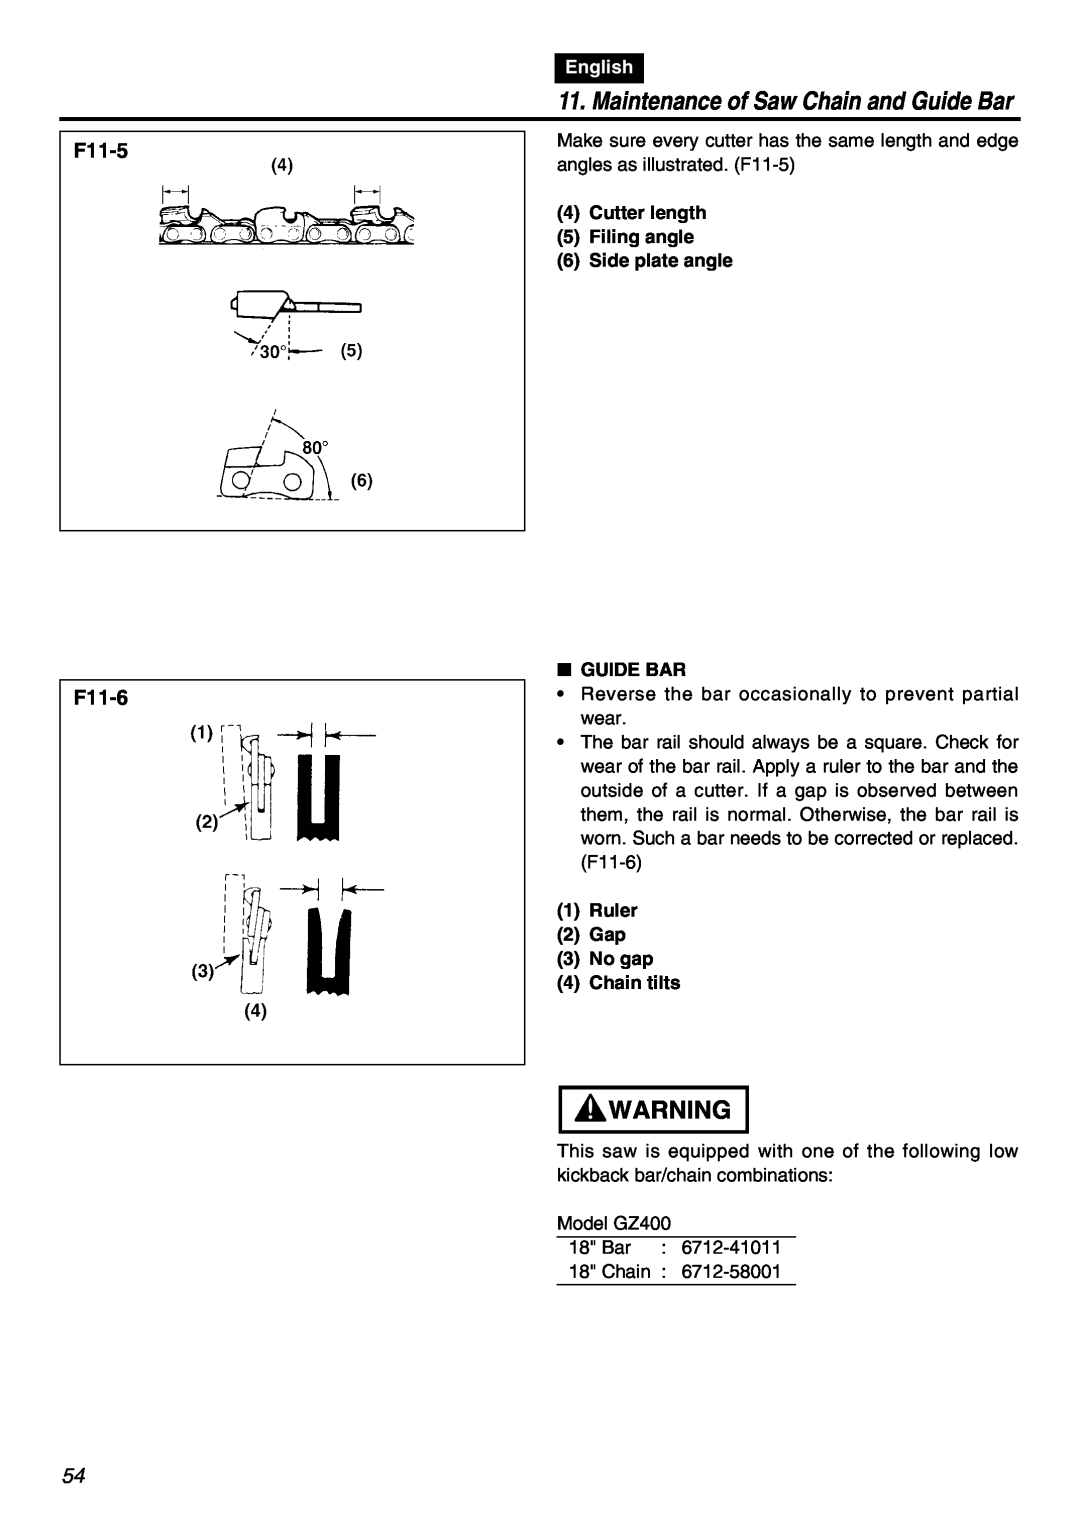 RedMax GZ400 manual F11-5 F11-6, Maintenance of Saw Chain and Guide Bar, English, Ruler 2 Gap 3 No gap 4 Chain tilts 